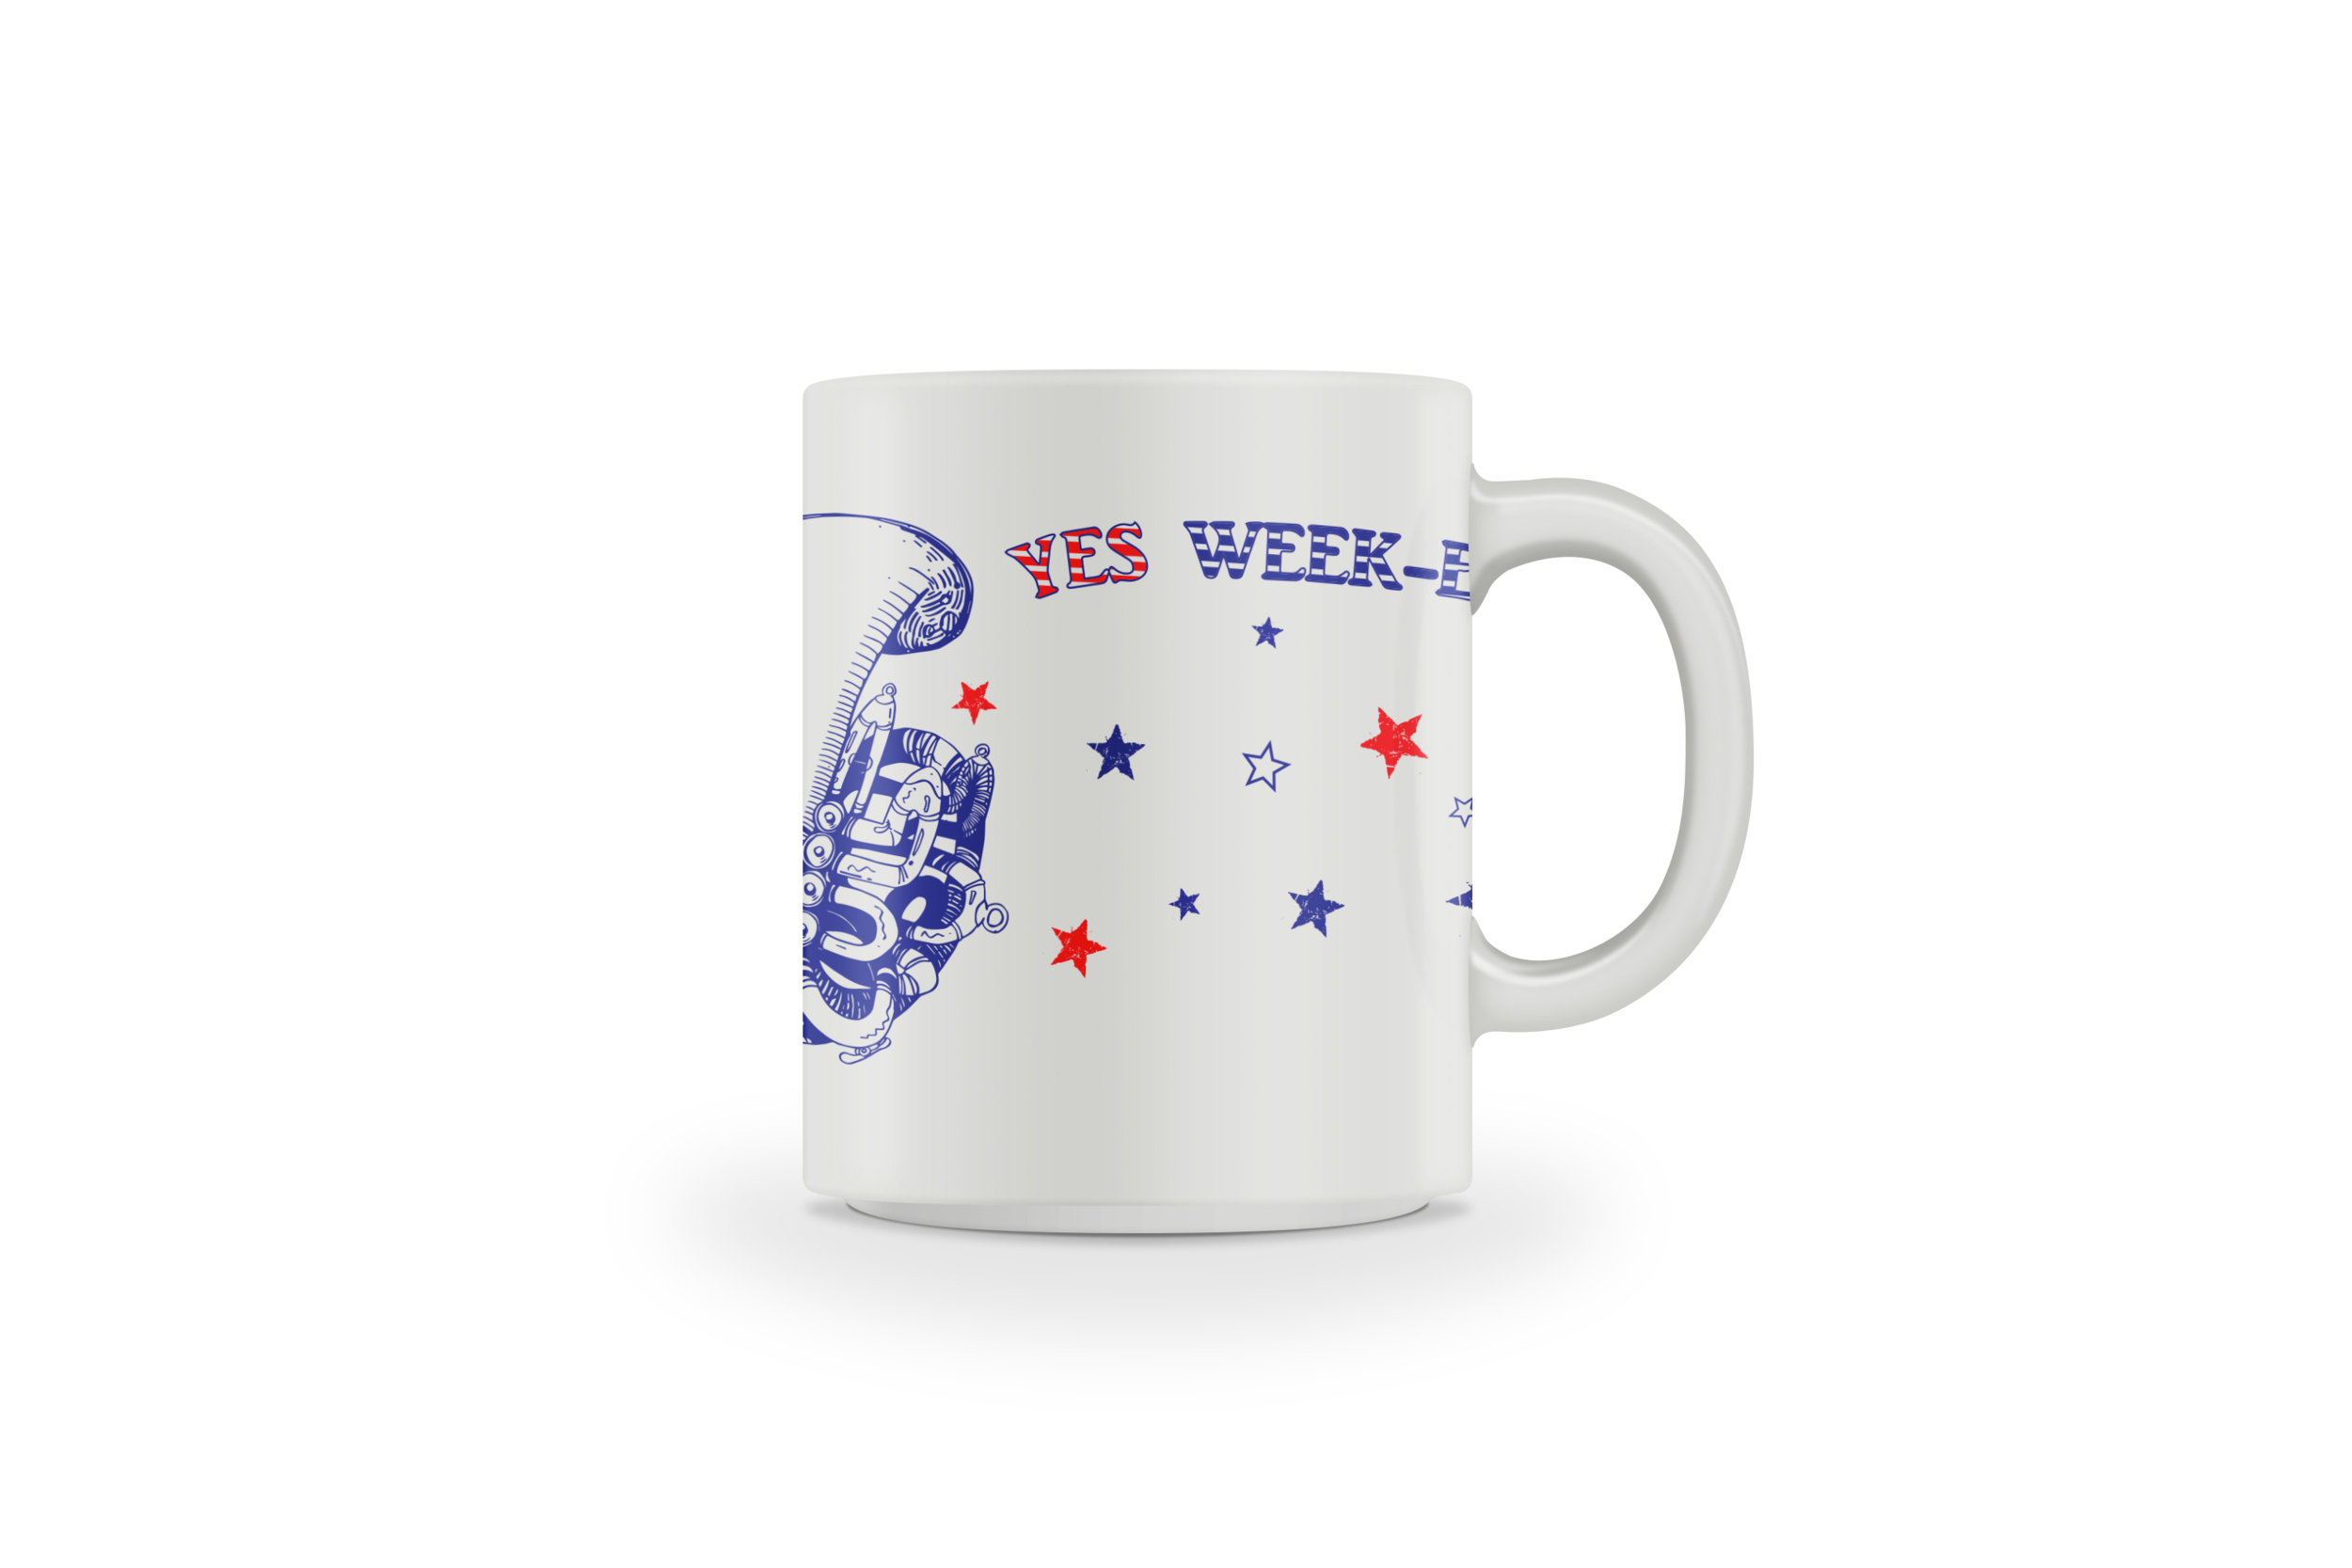 Yes-week-end-mug-sans